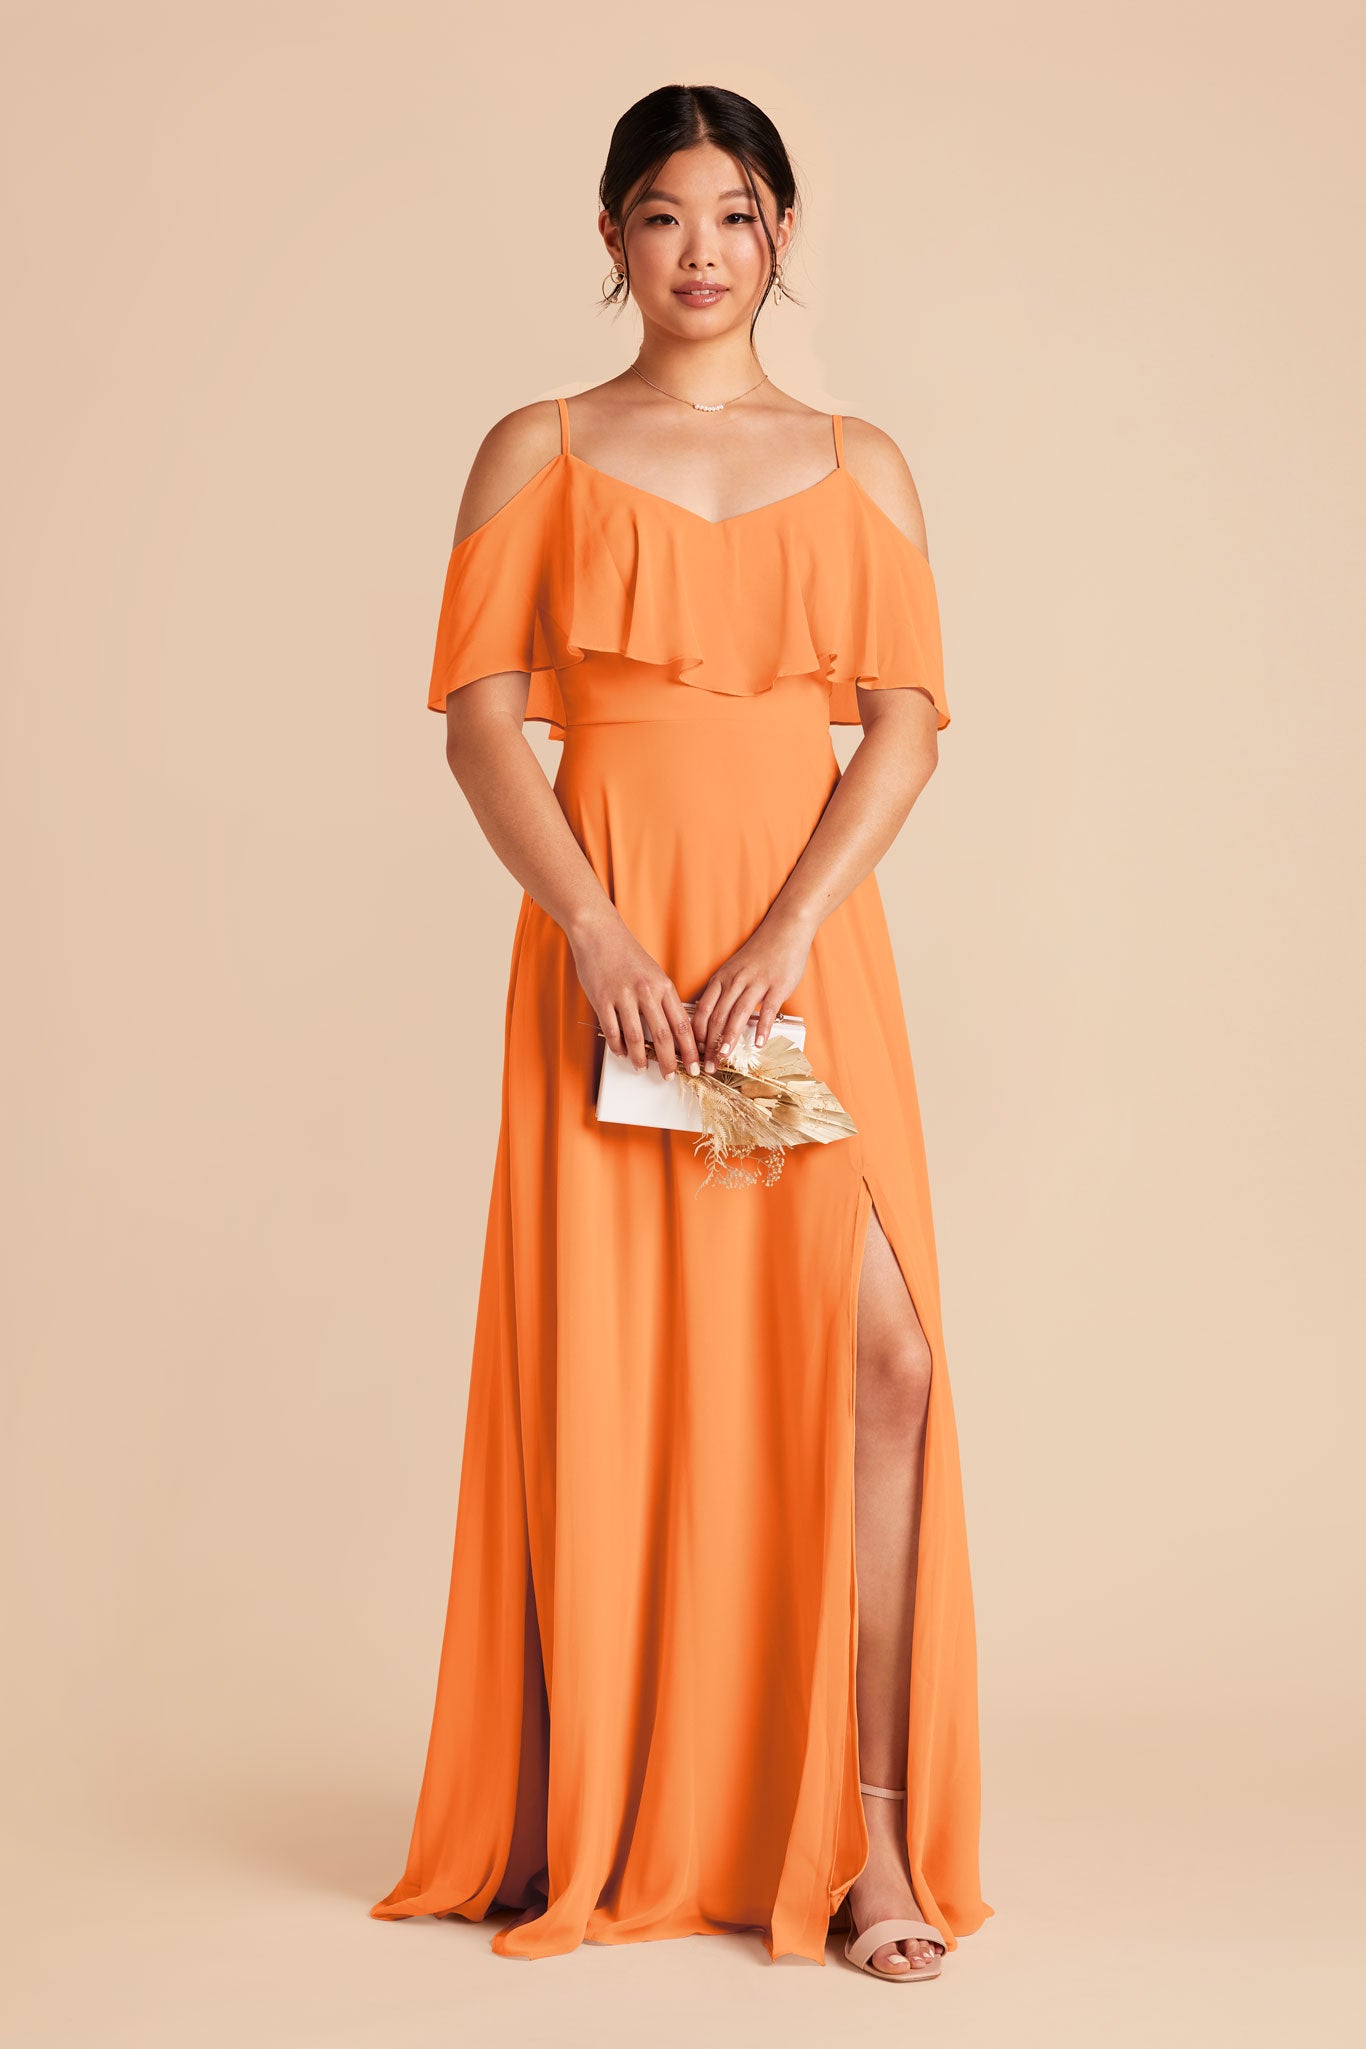 Apricot Jane Convertible Dress by Birdy Grey